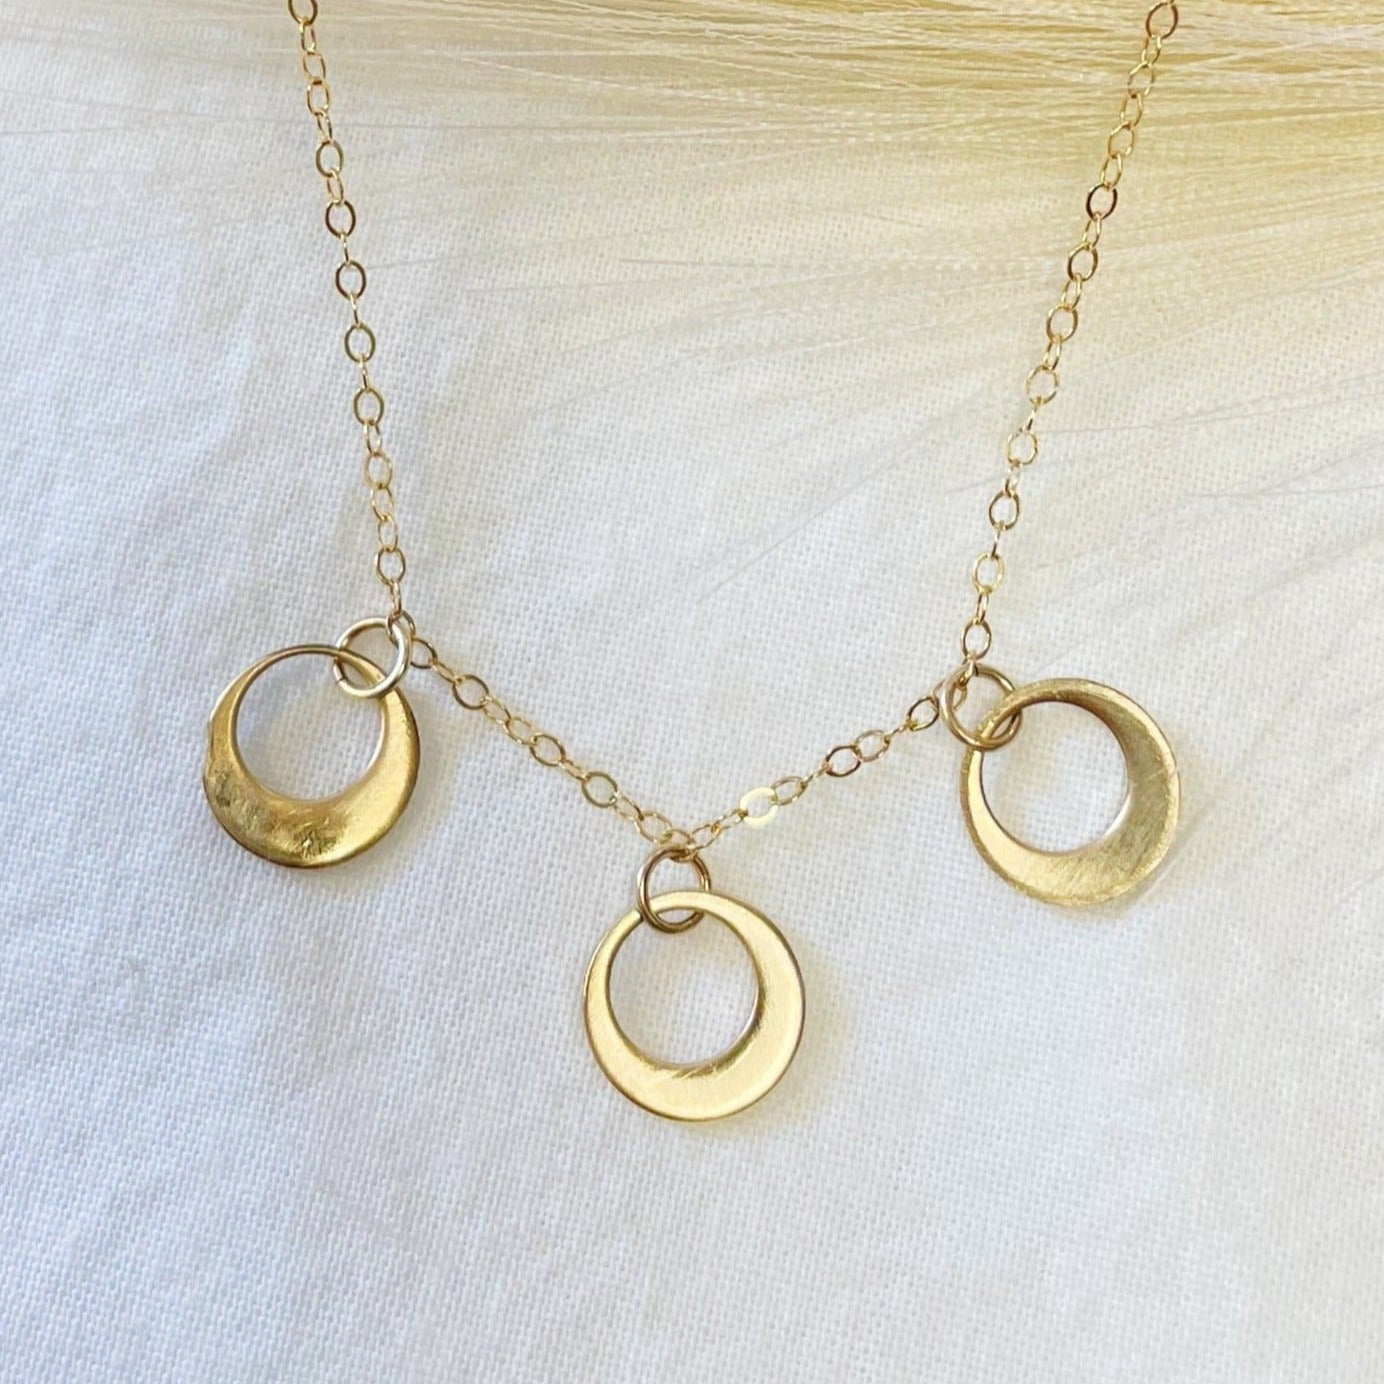 Revolve Necklace (Gold-filled or Sterling Silver)